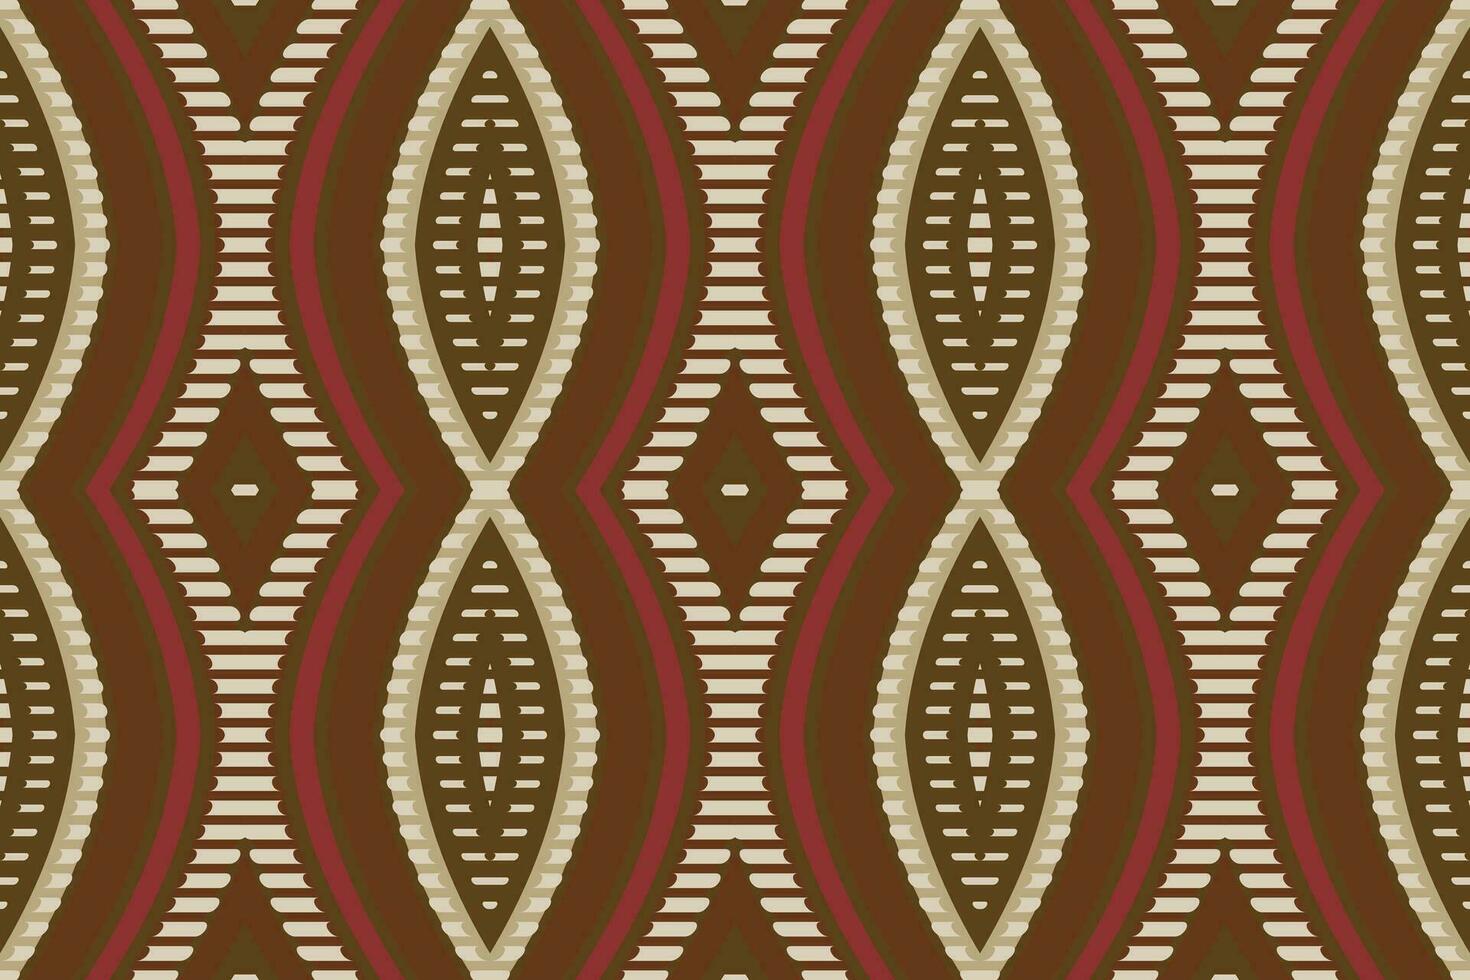 ikat damasco paisley bordado fundo. ikat listra geométrico étnico oriental padronizar tradicional. ikat asteca estilo abstrato Projeto para impressão textura, tecido, saree, sari, tapete. vetor